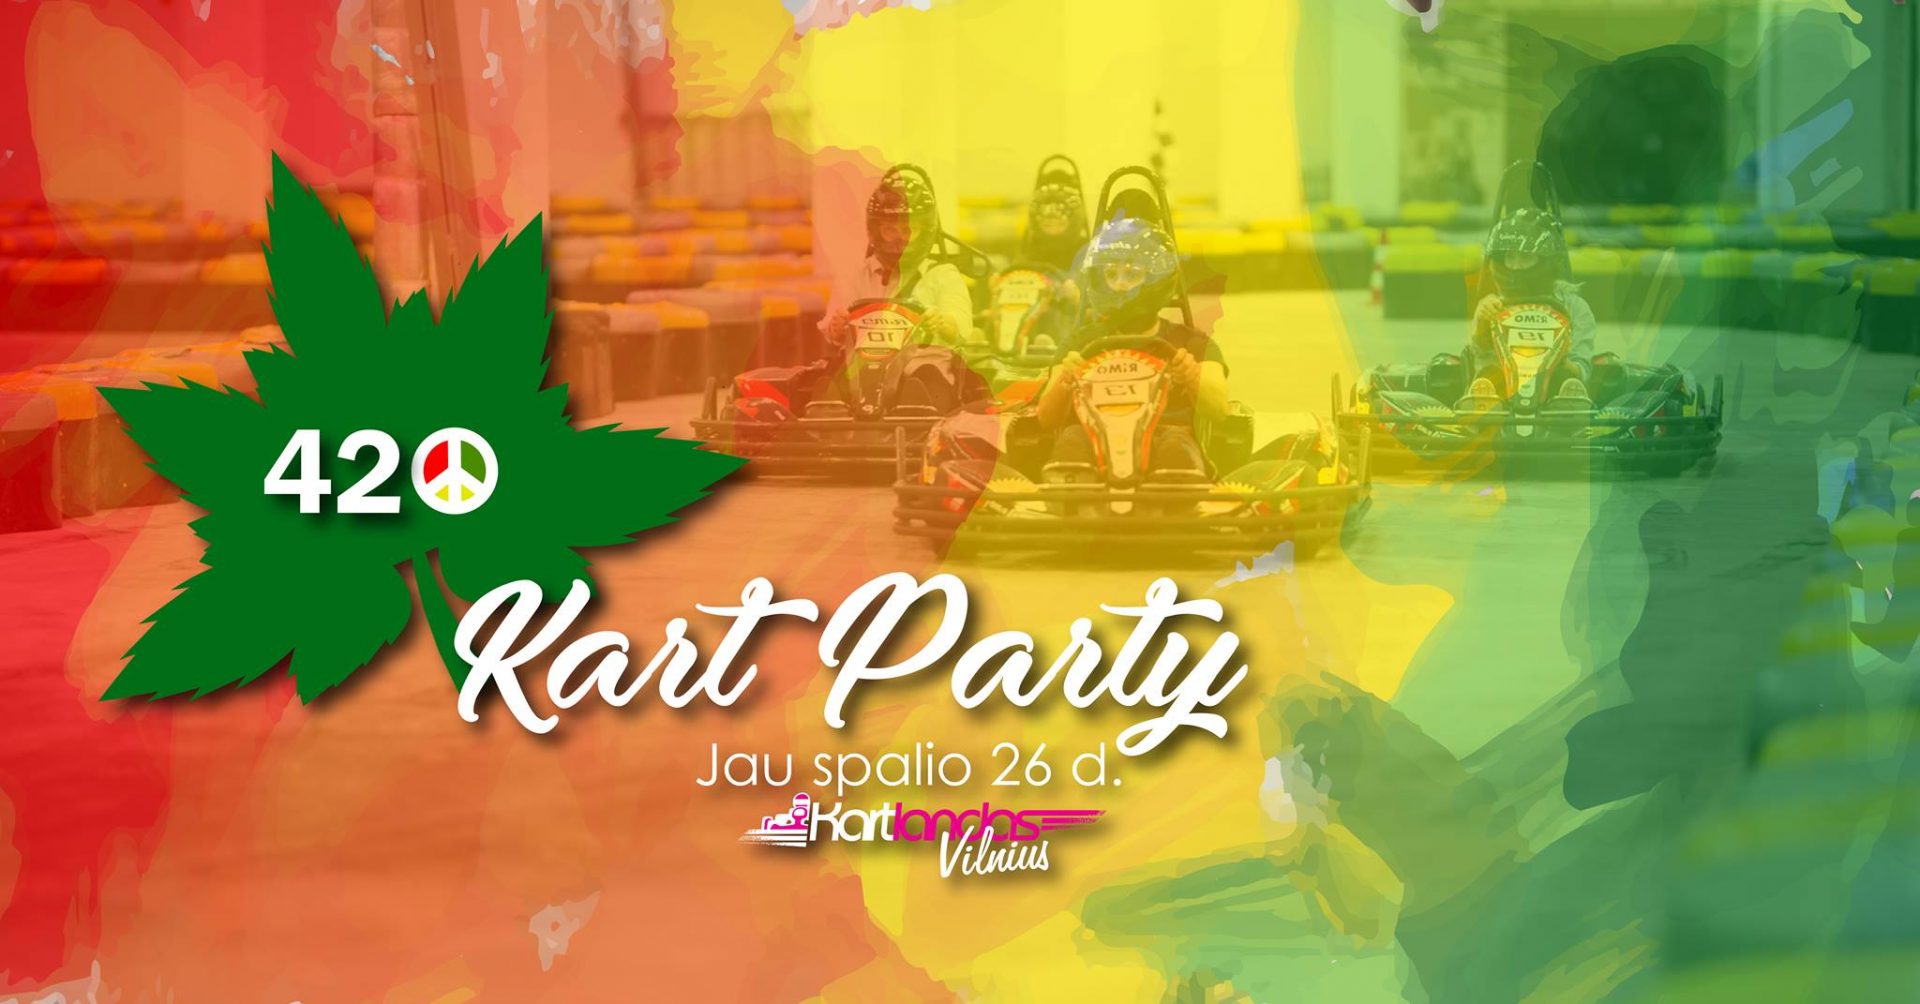 420''Kart Party @Kartlandas Vilnius. I etapas